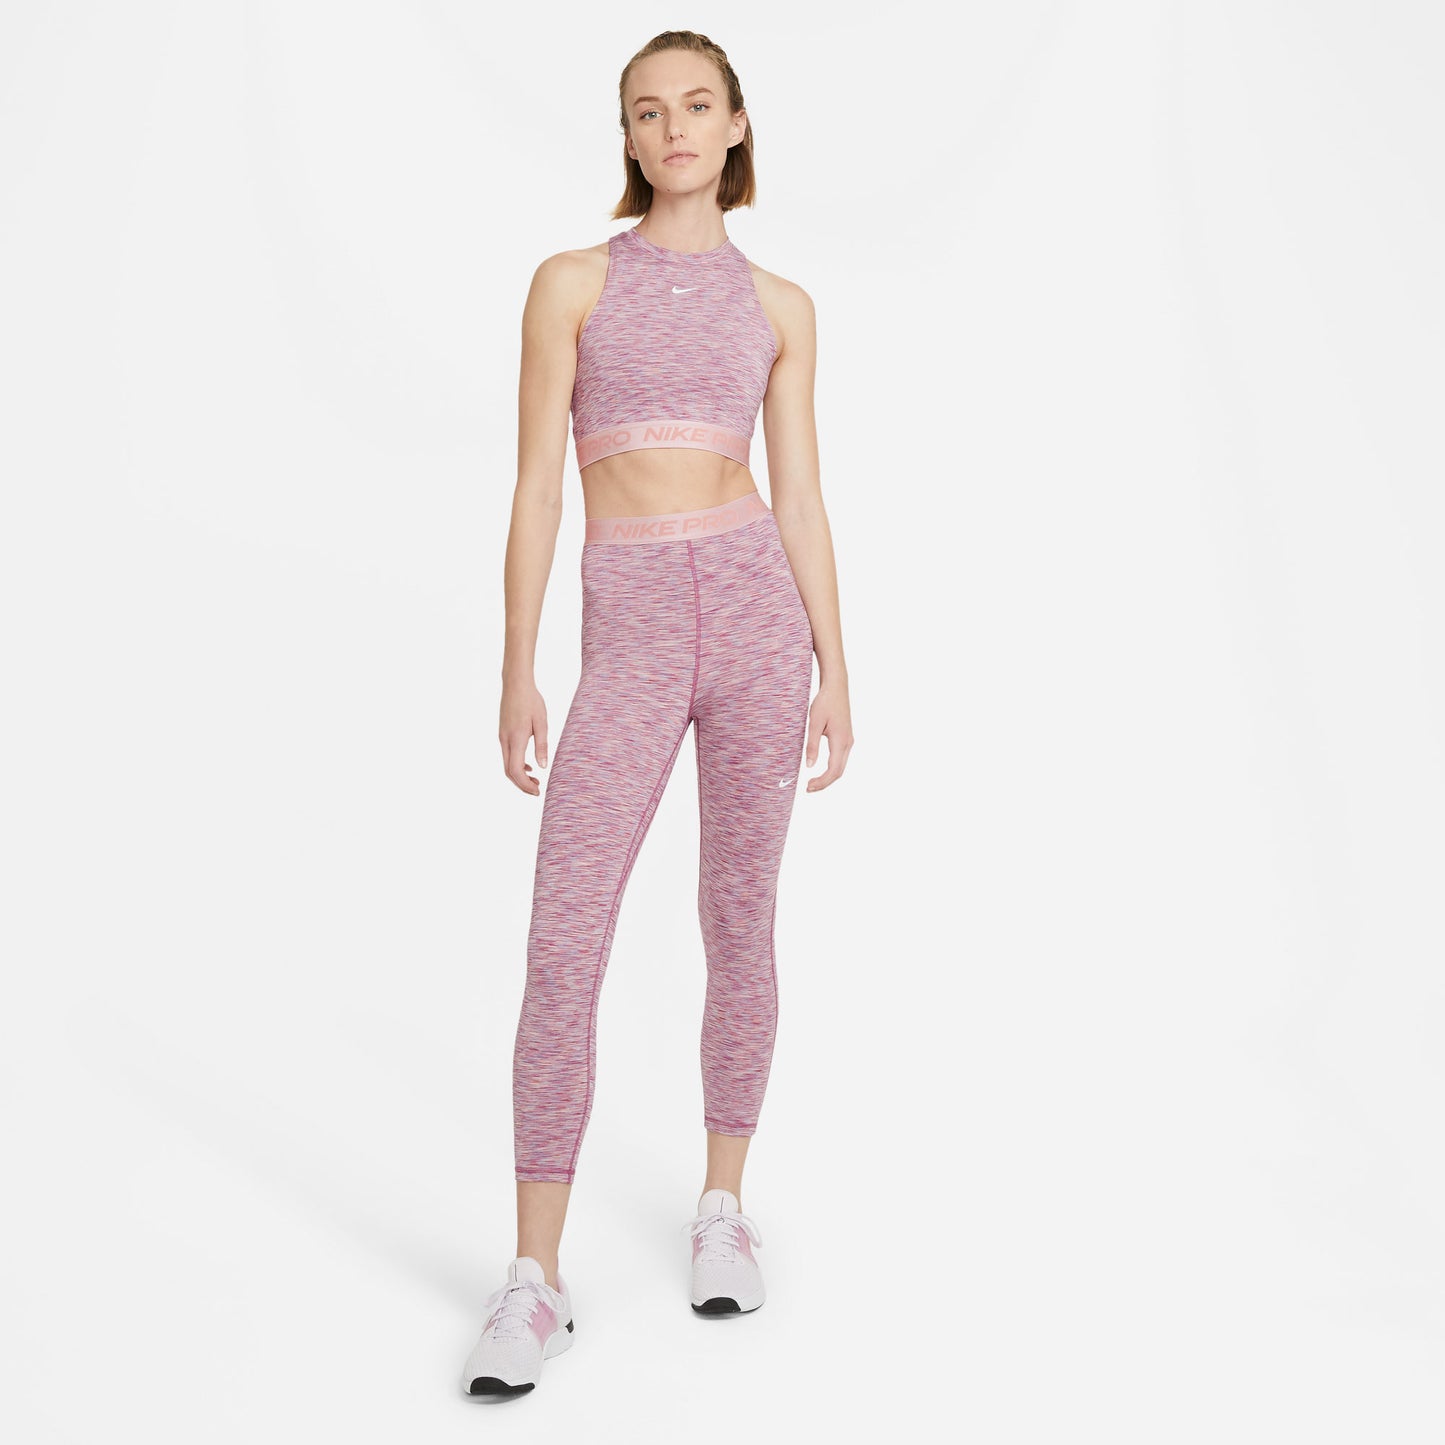 Nike Women's Cropped Space-Dye Tights Pink (3)